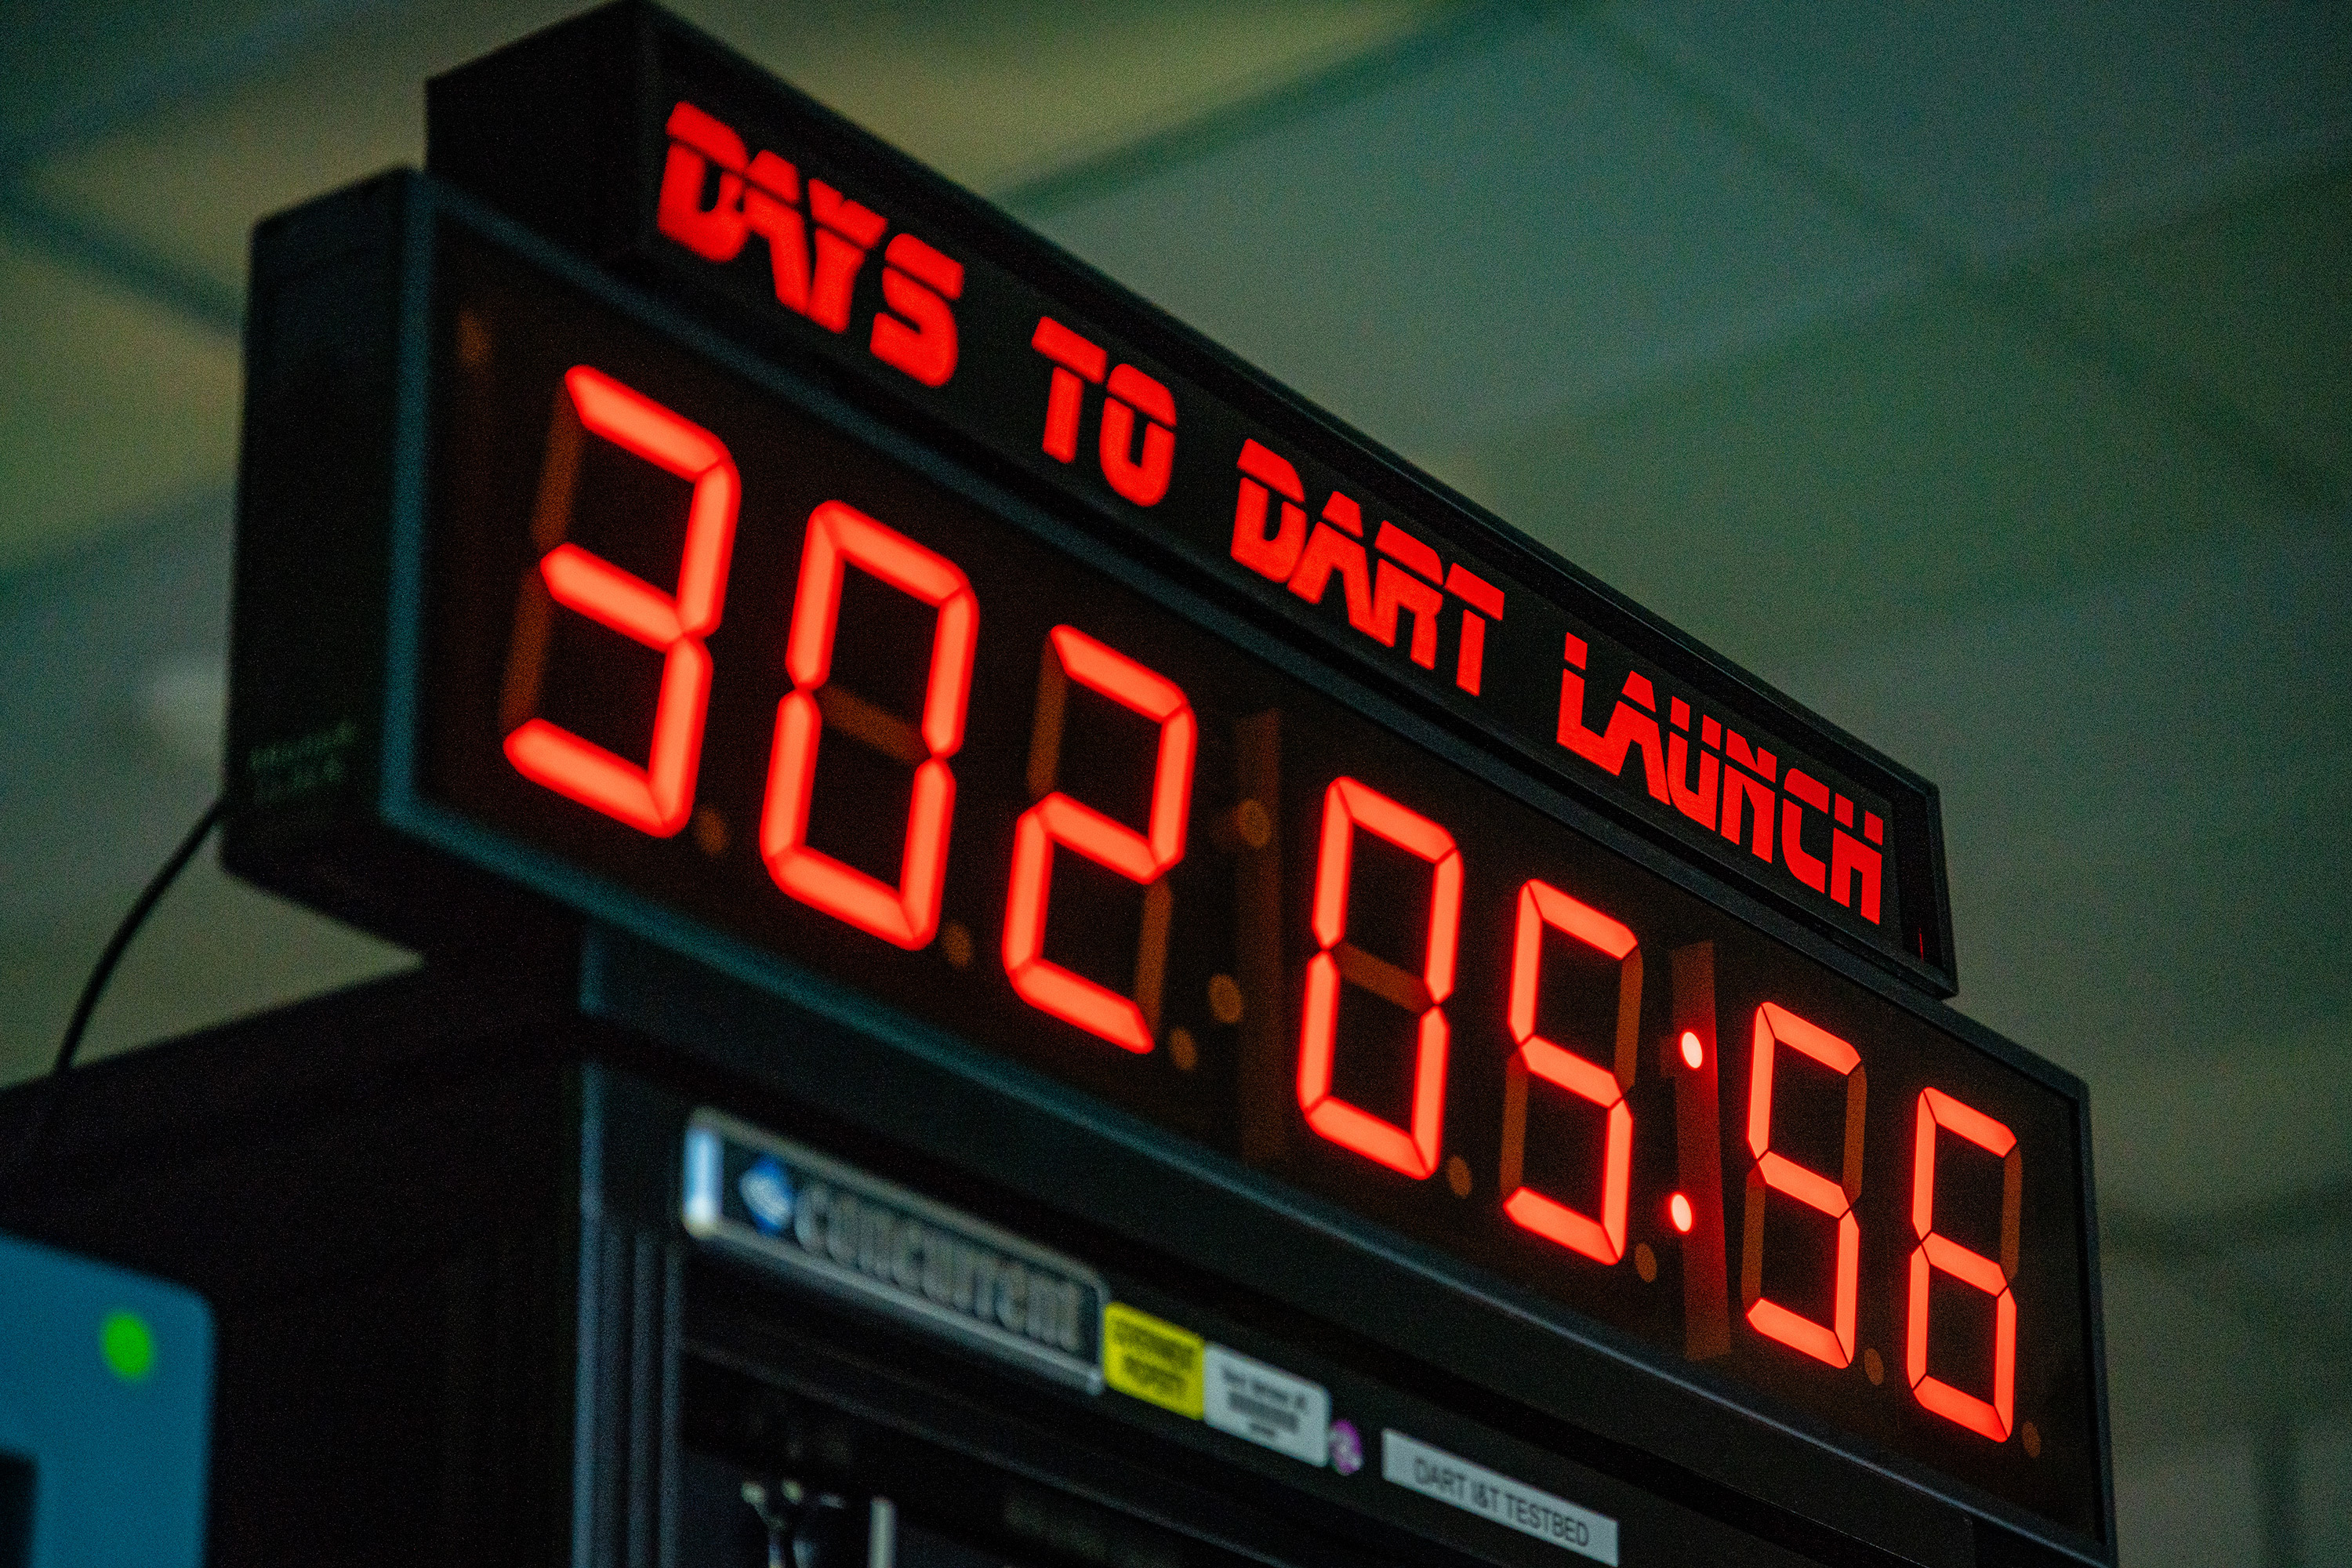 DART Control room countdown clock